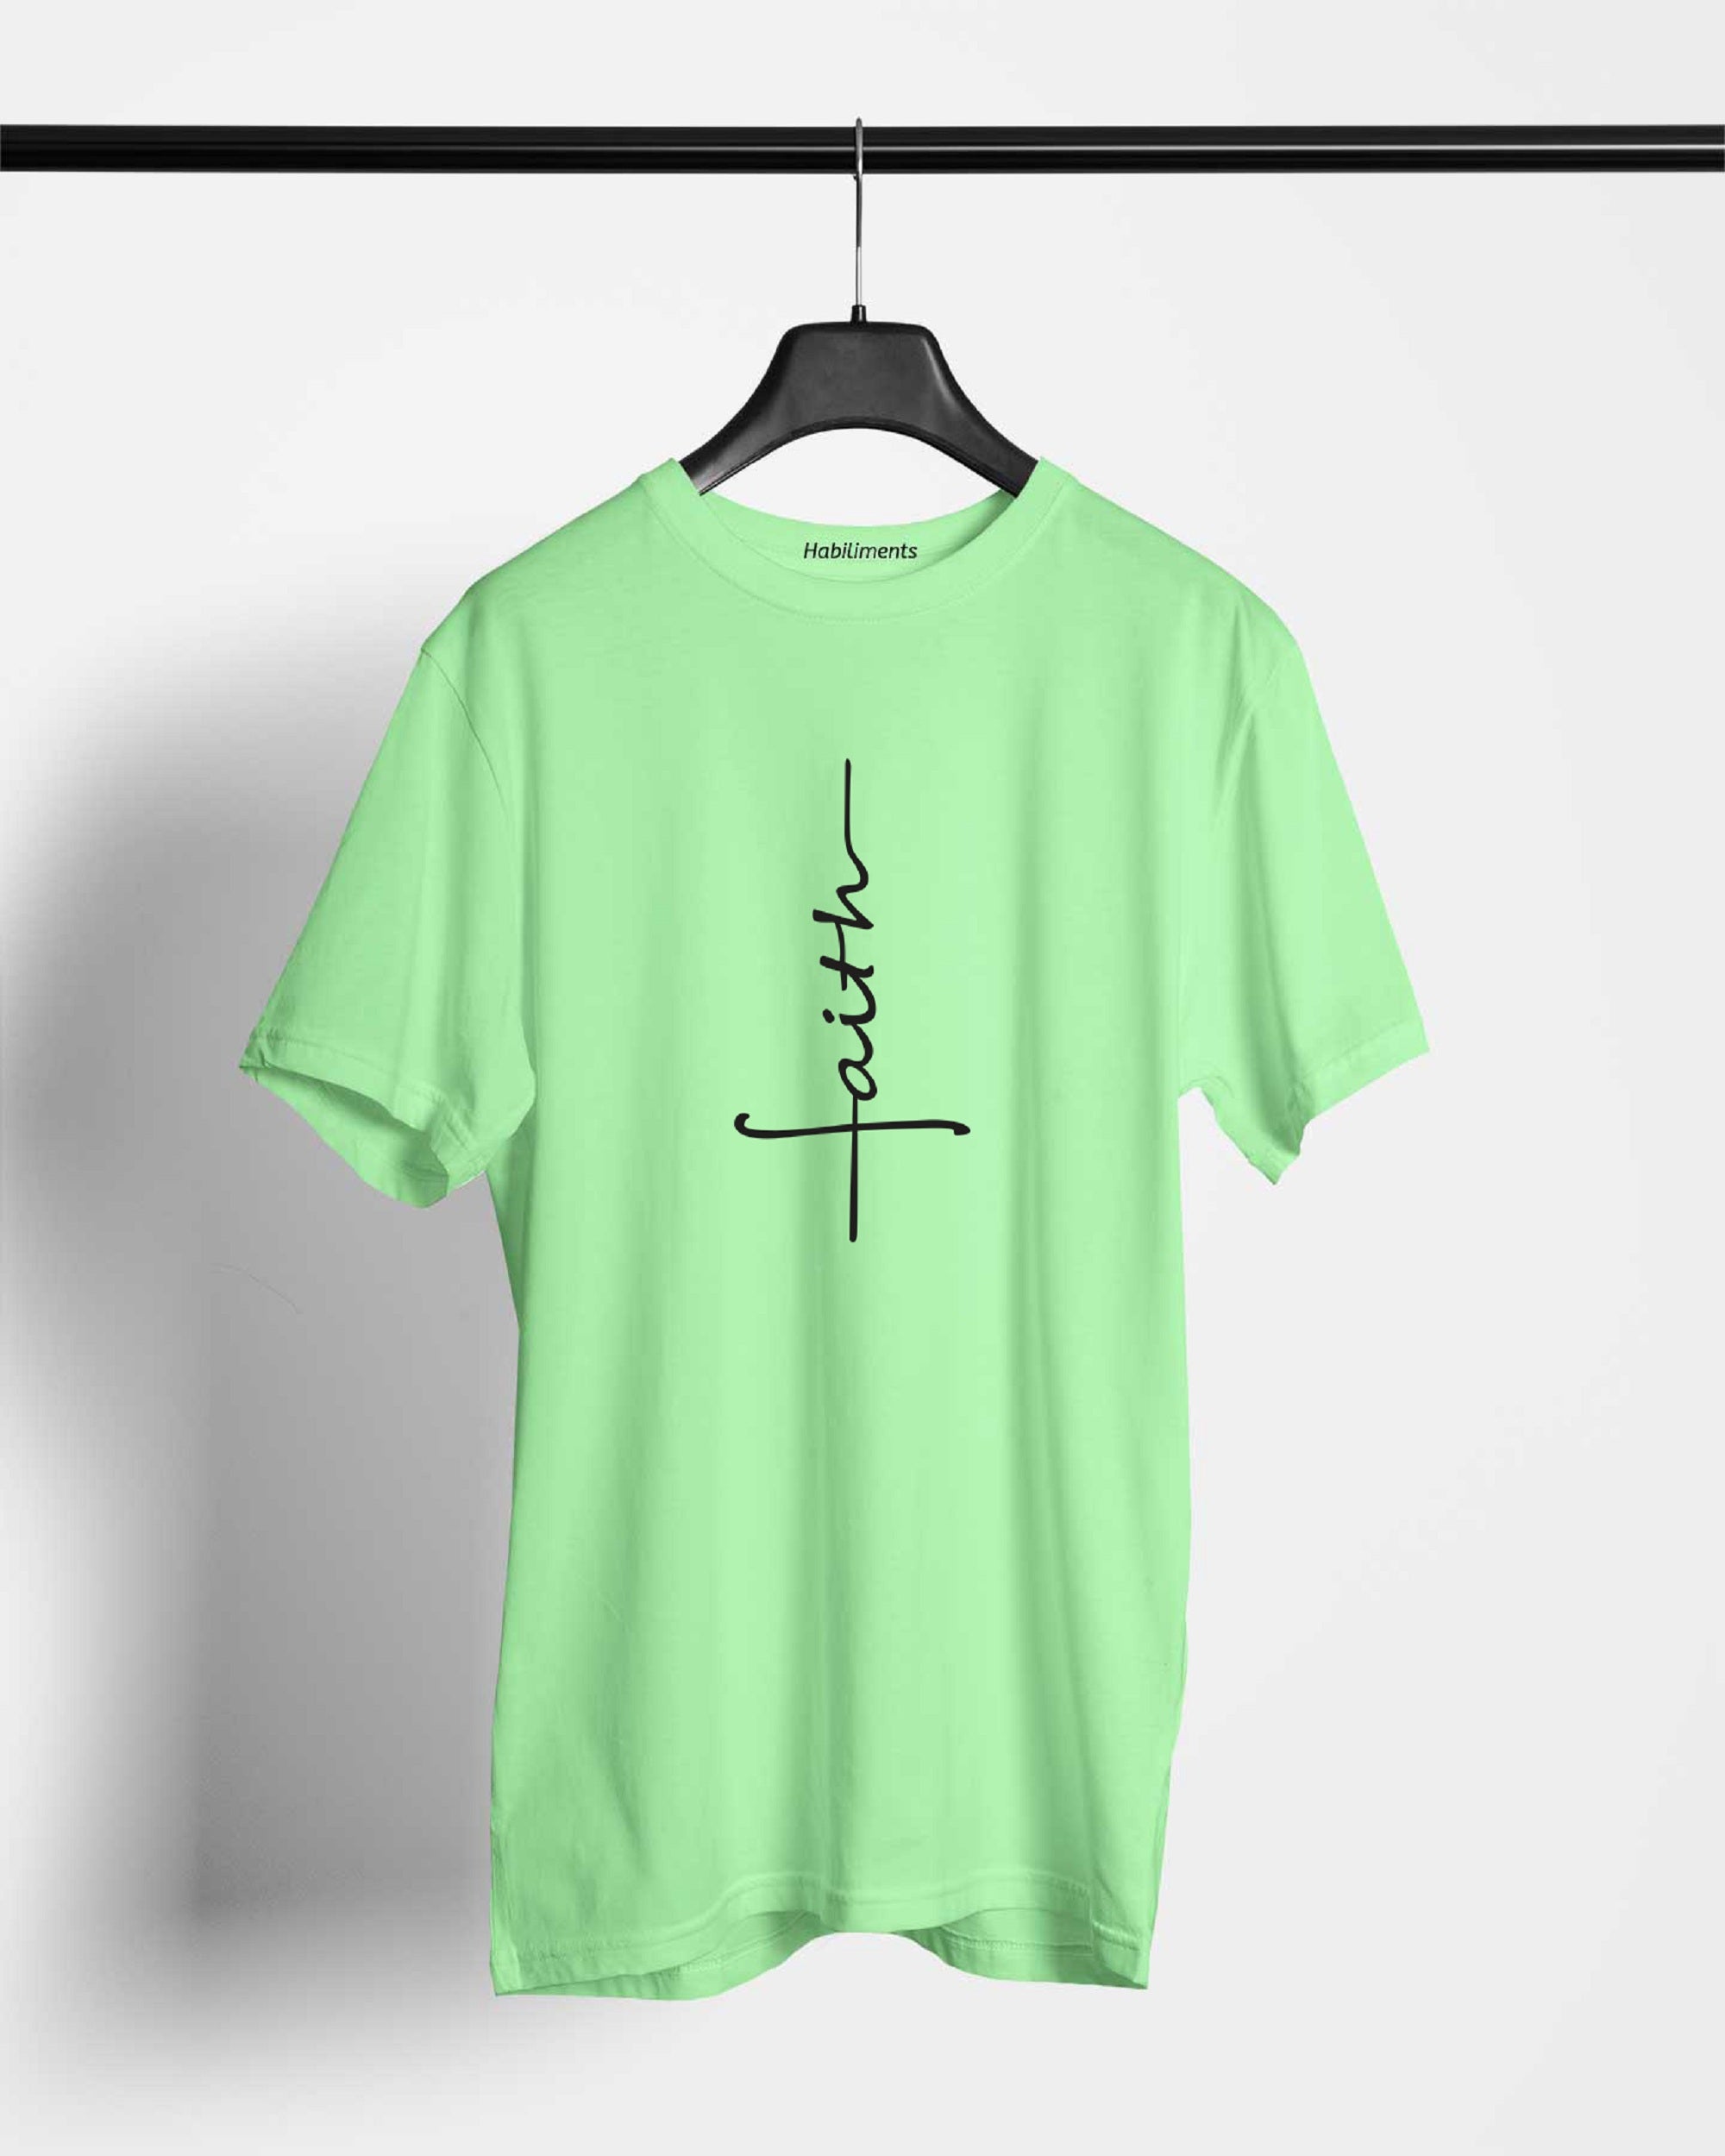 Faith T-Shirts For Men || Pista || Stylish Tshirts || 100% Cotton || Best T-Shirt For Men's